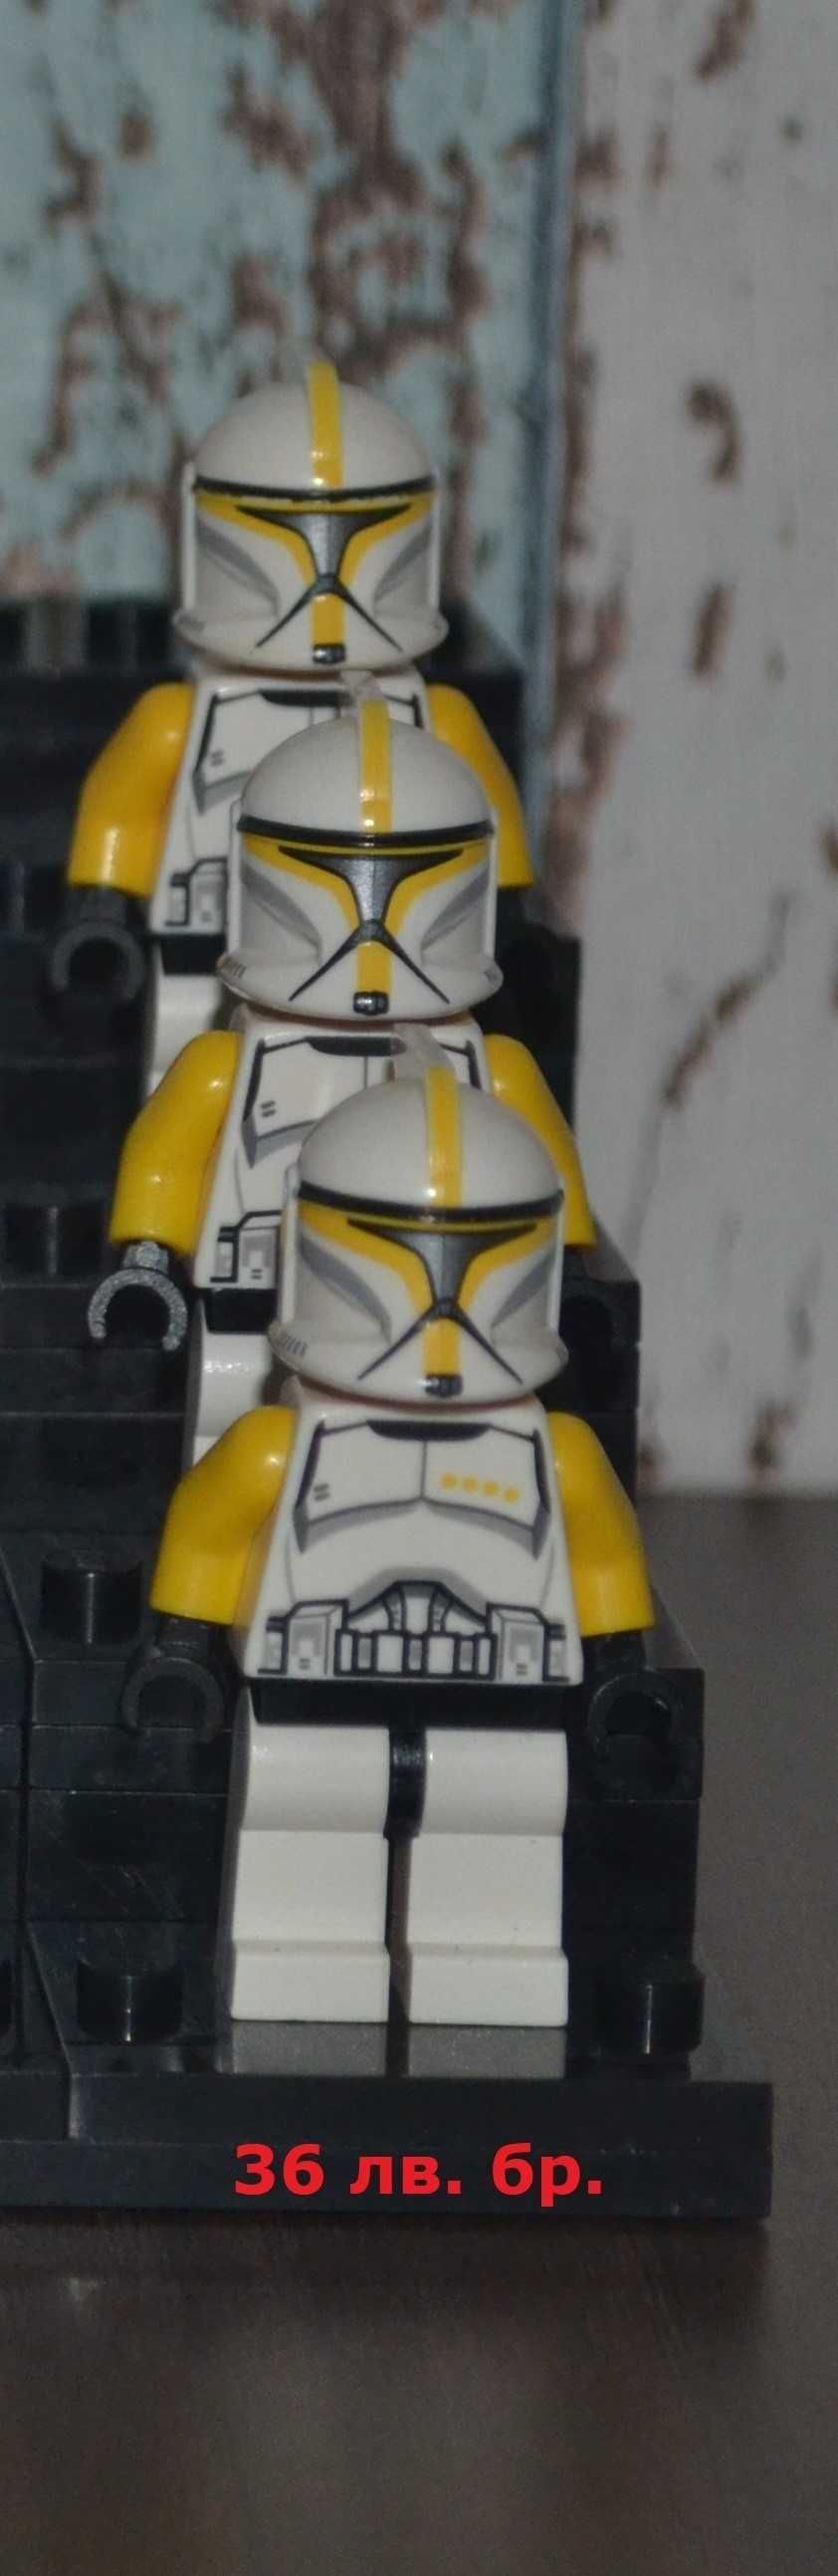 LEGO Star Wars минифигурки - Clone, Jedi и др.